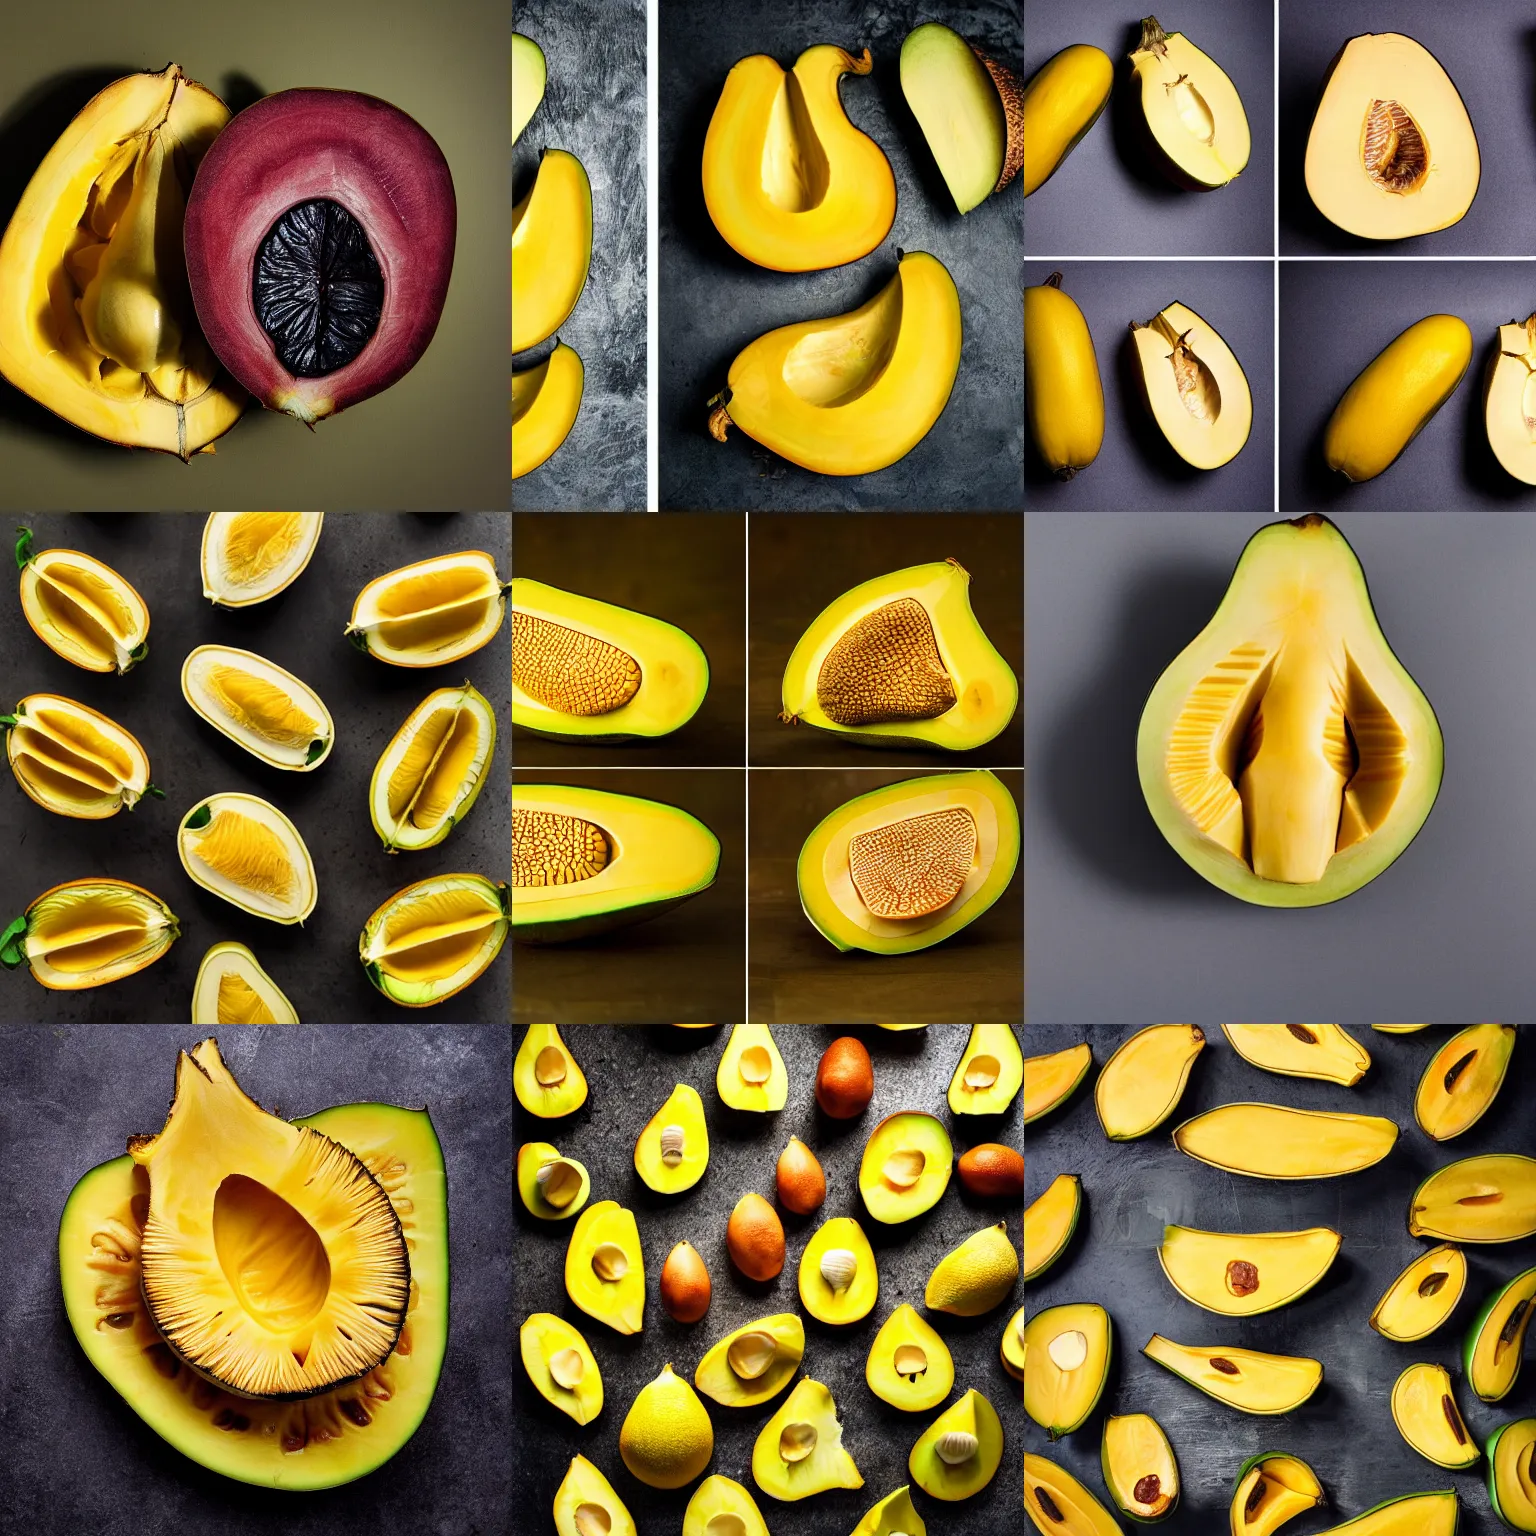 Prompt: jackfruit in the shape of samuel l jackson face, symmetrical, food photography, studio lighting